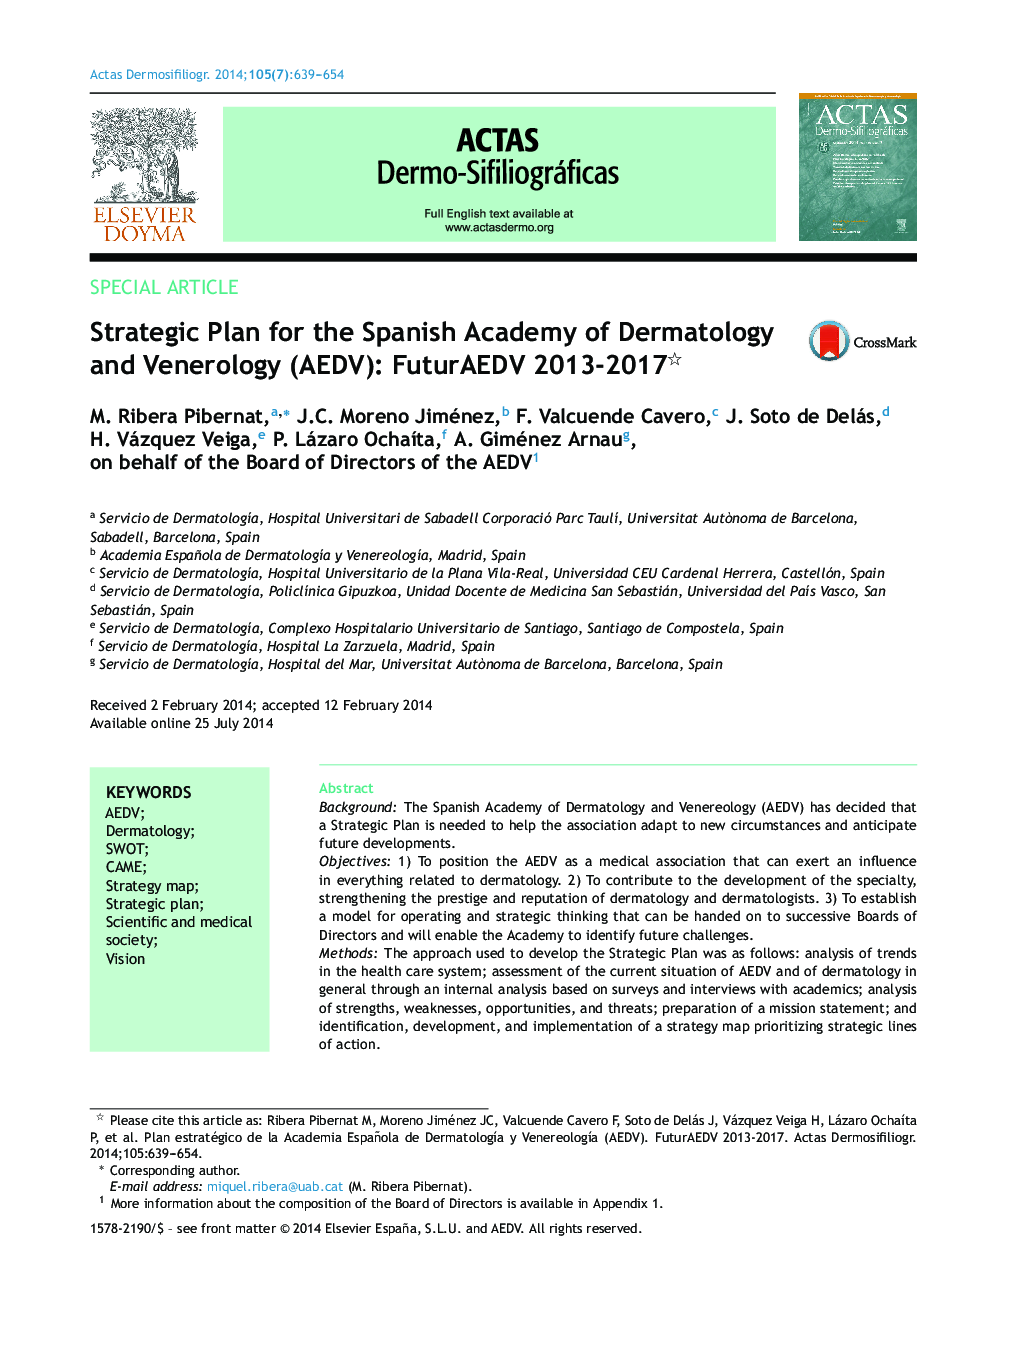 Strategic Plan for the Spanish Academy of Dermatology and Venerology (AEDV): FuturAEDV 2013-2017 